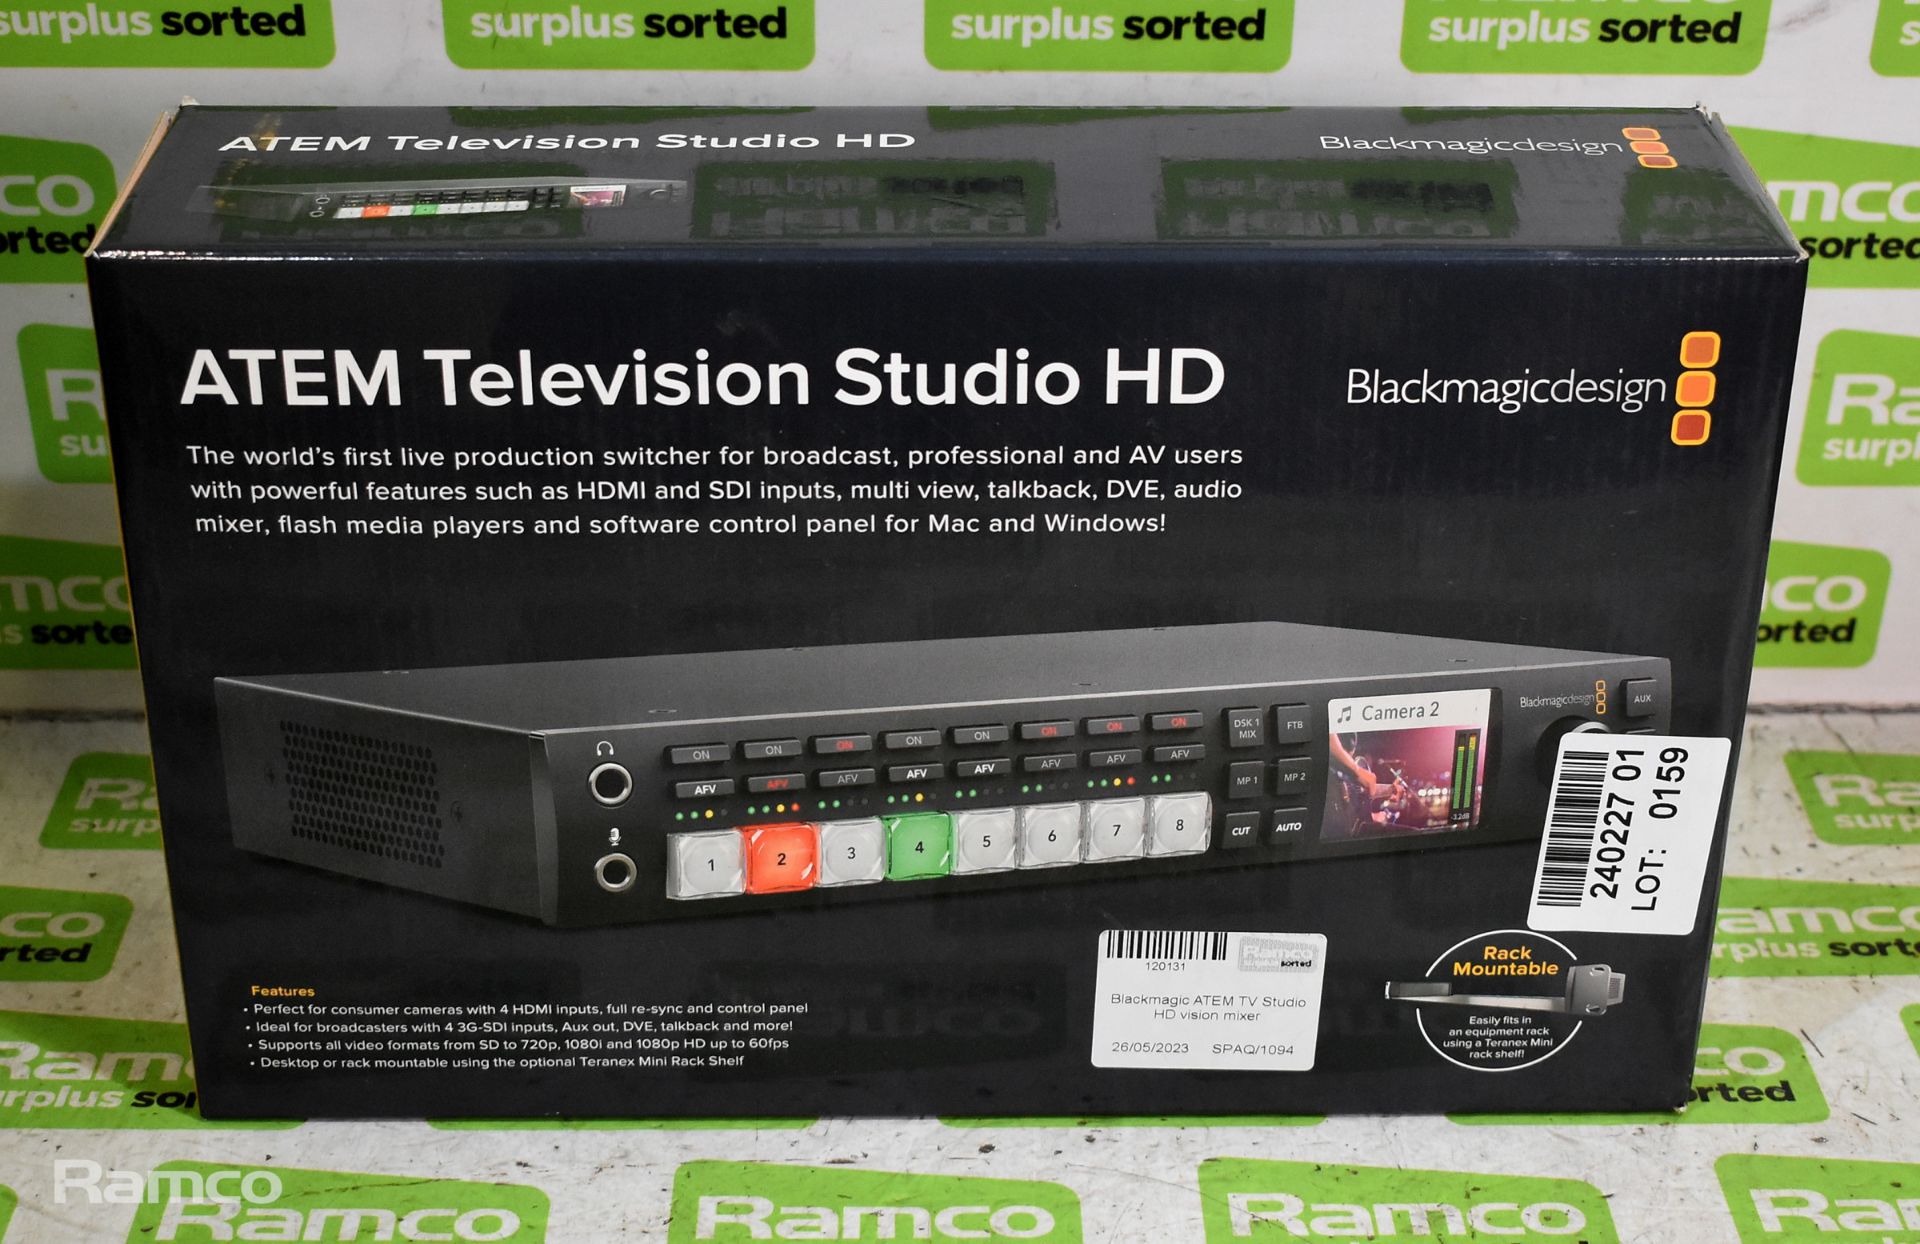 Blackmagic ATEM TV Studio HD vision mixer - Image 2 of 2